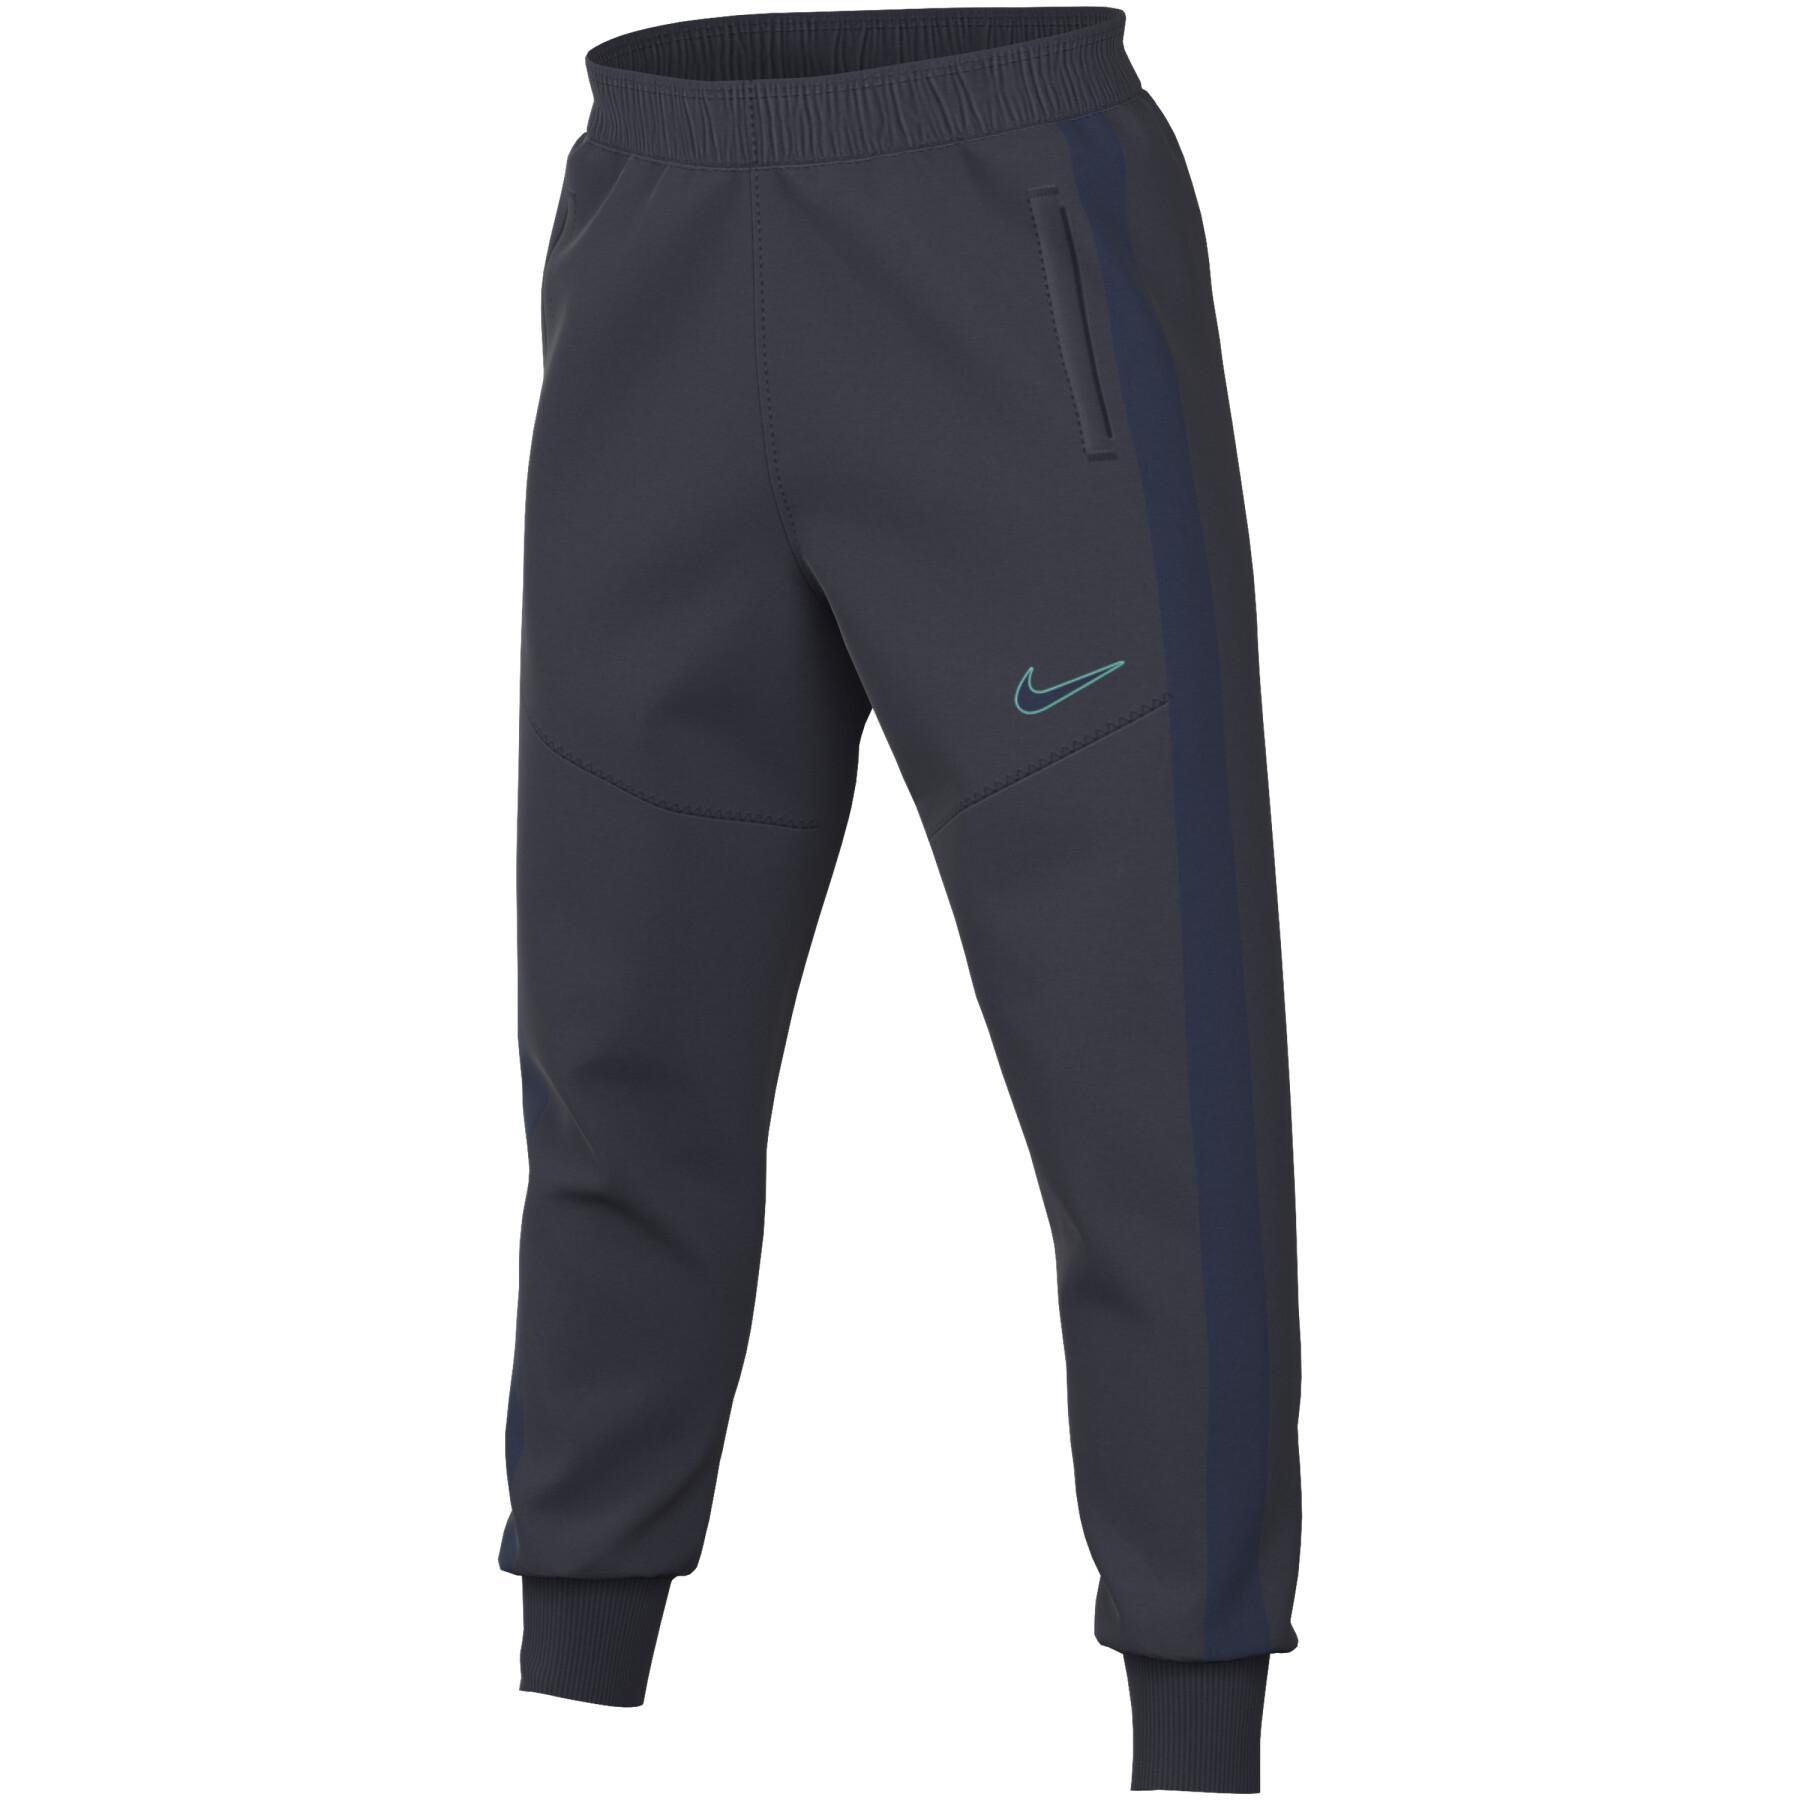 Jogging Nike Fleece BB - Nike - Brands - Lifestyle